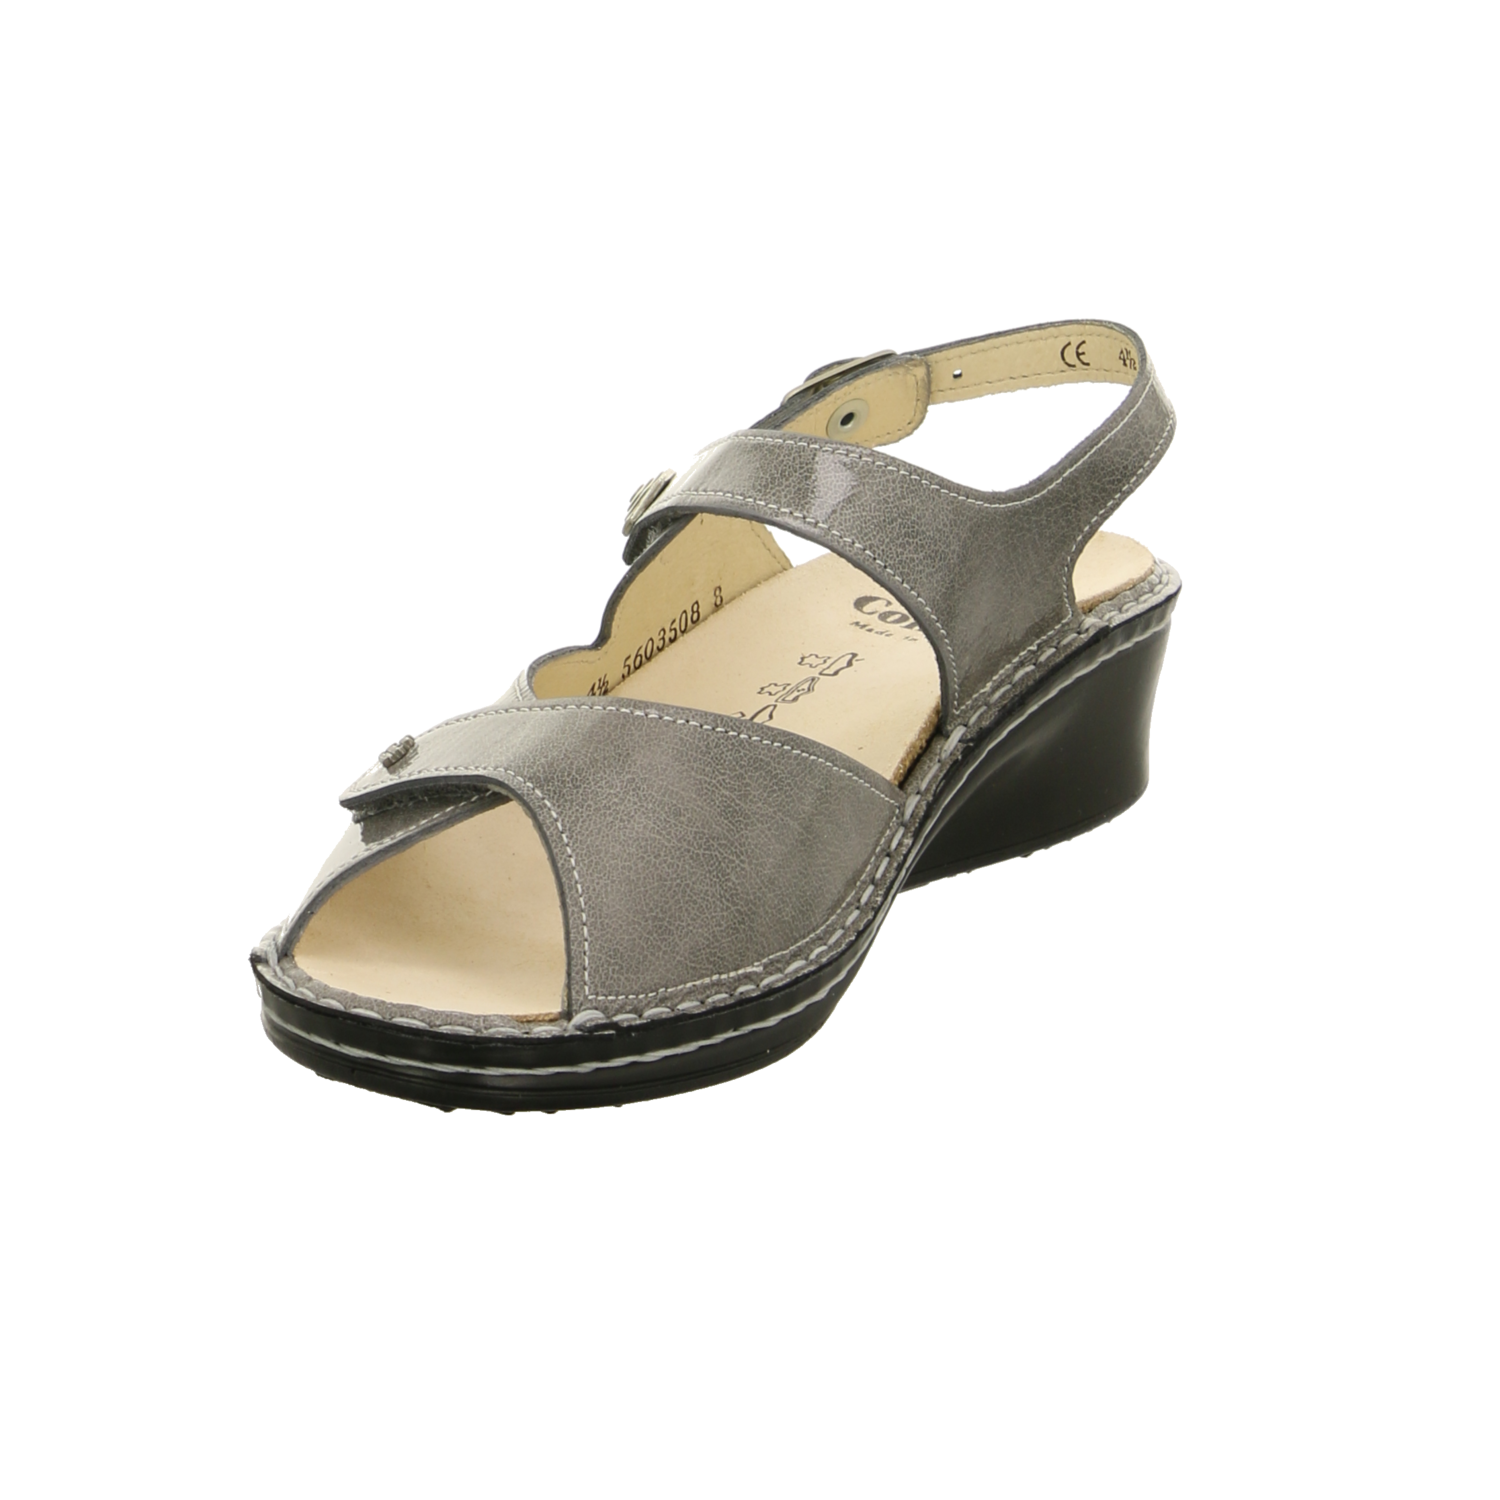 FinnComfort Comfort-Sandalette grau / dunkel-grau